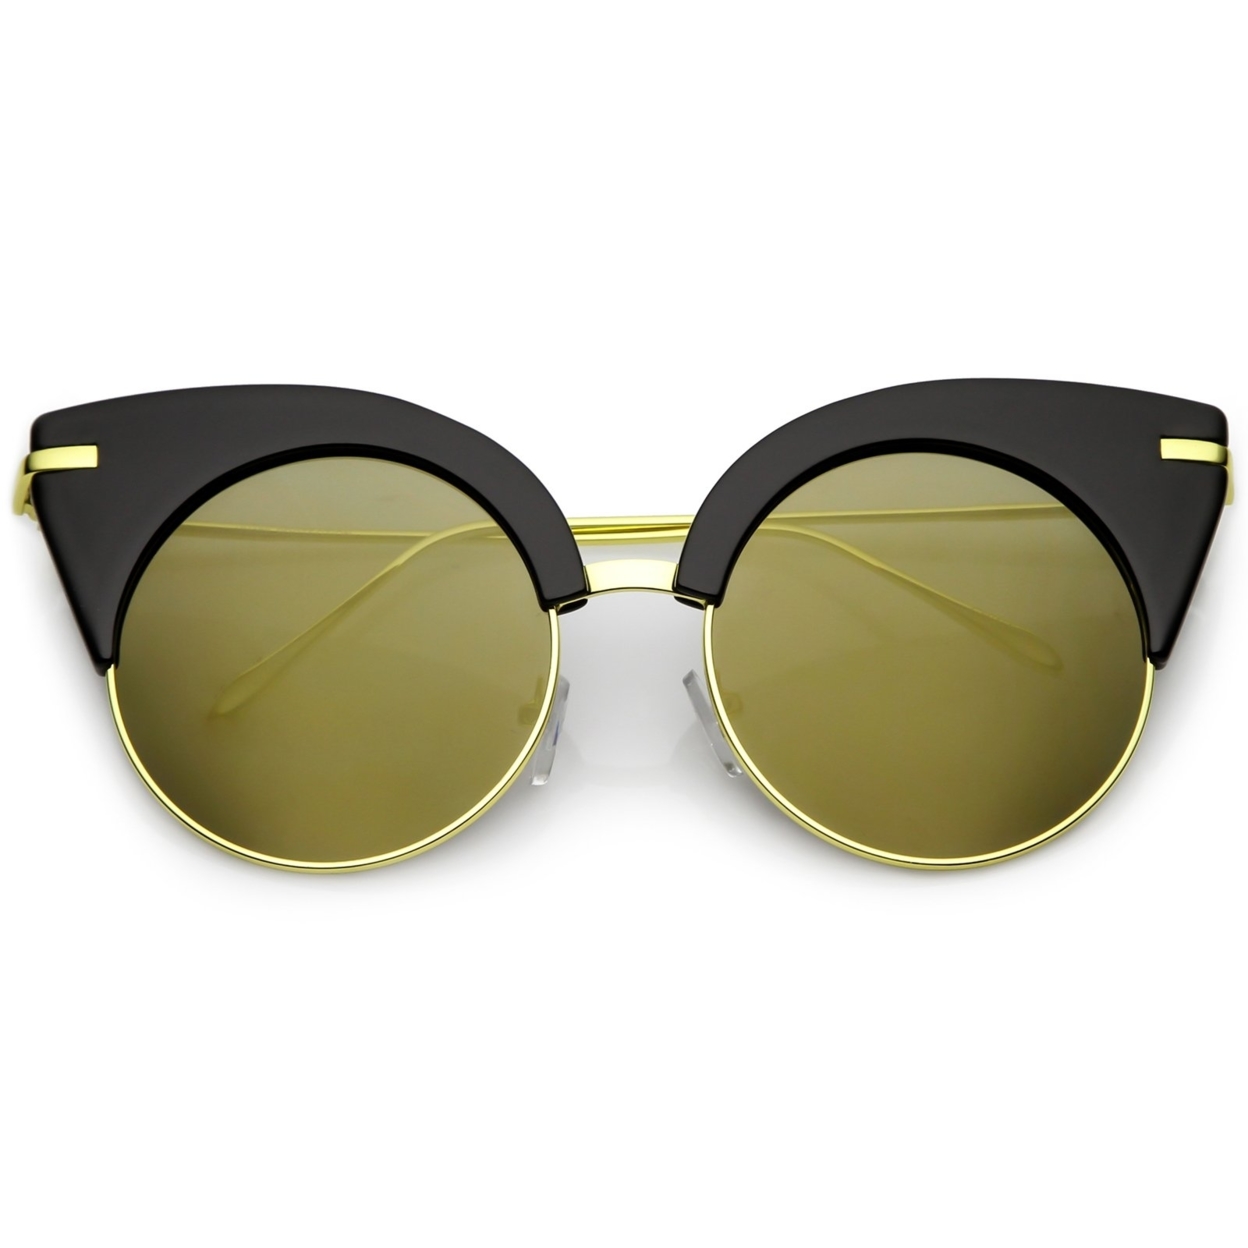 Oversize Half Frame Cat Eye Sunglasses Ultra Slim Arms Round Mirrored Flat Lens 54mm - Black Gold / Pink Mirror